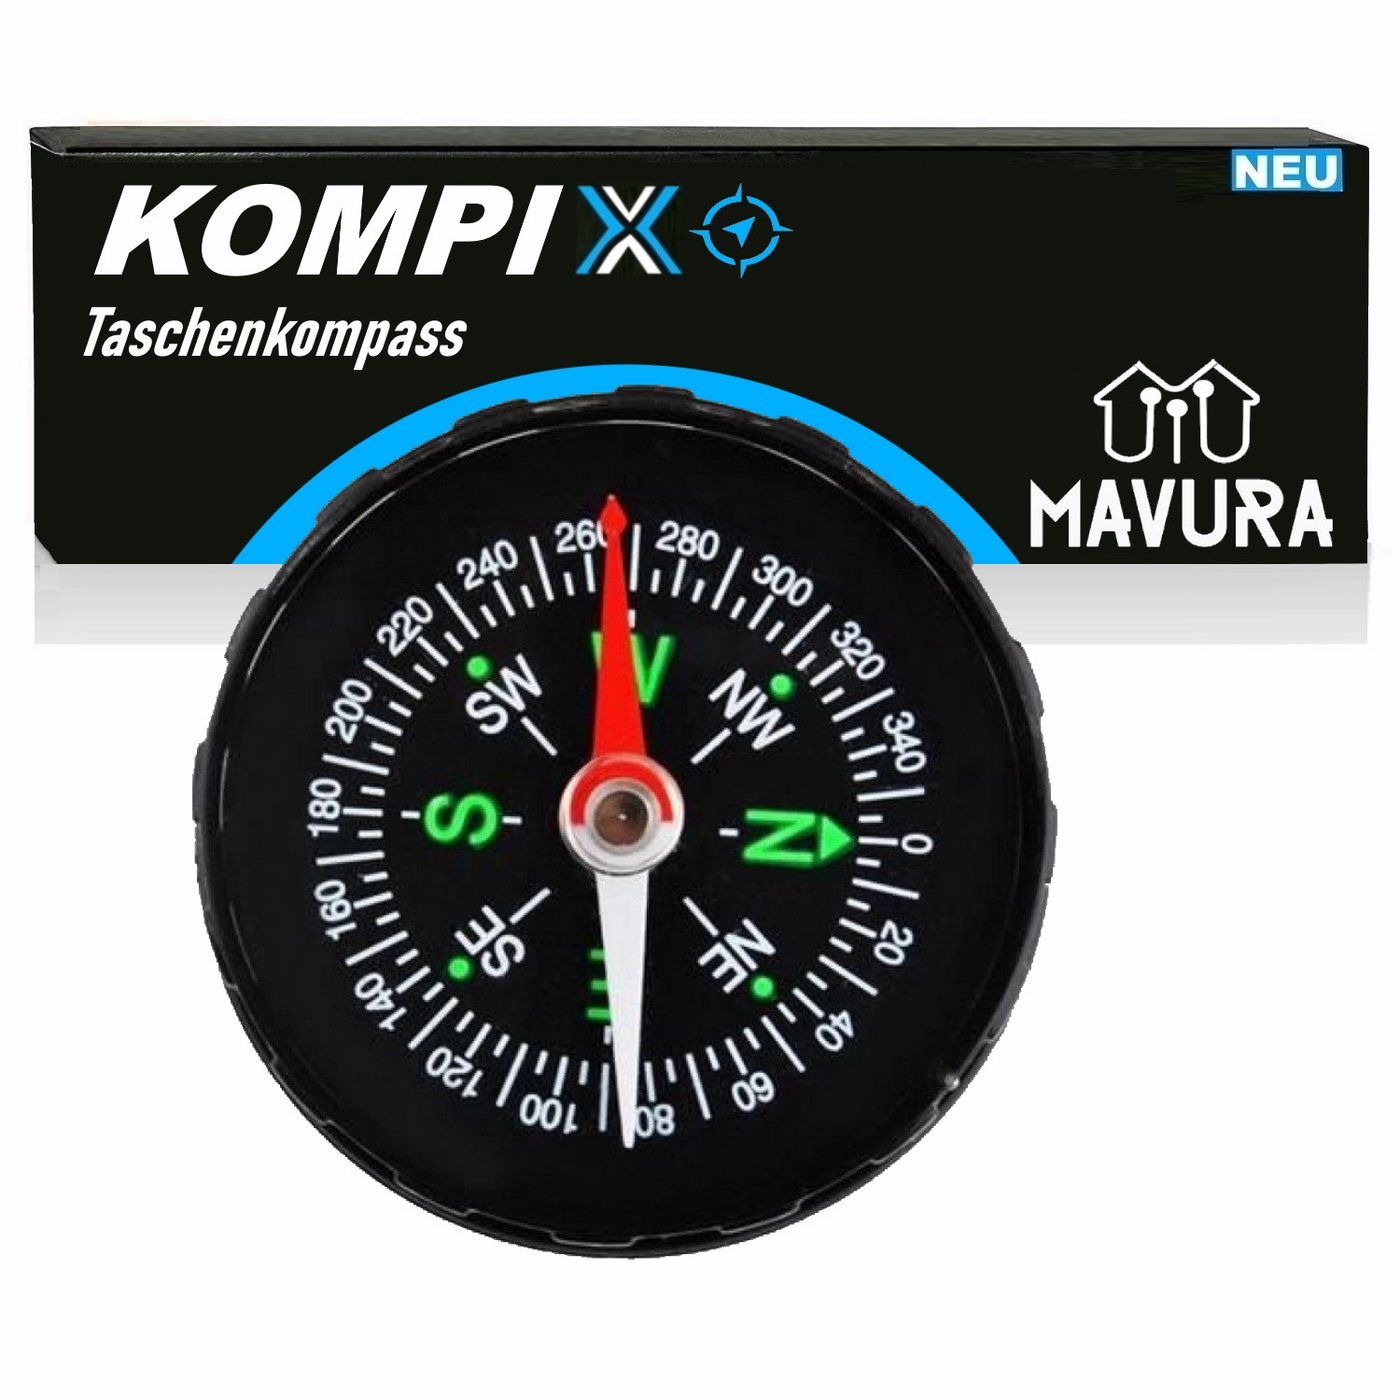 MAVURA Kompass KOMPIX Taschenkompass Mini Outdoor Compass Marschkompass Wandern, Auto Fahrrad tragbar Universal Jäger Pfadfinder Kompass von MAVURA